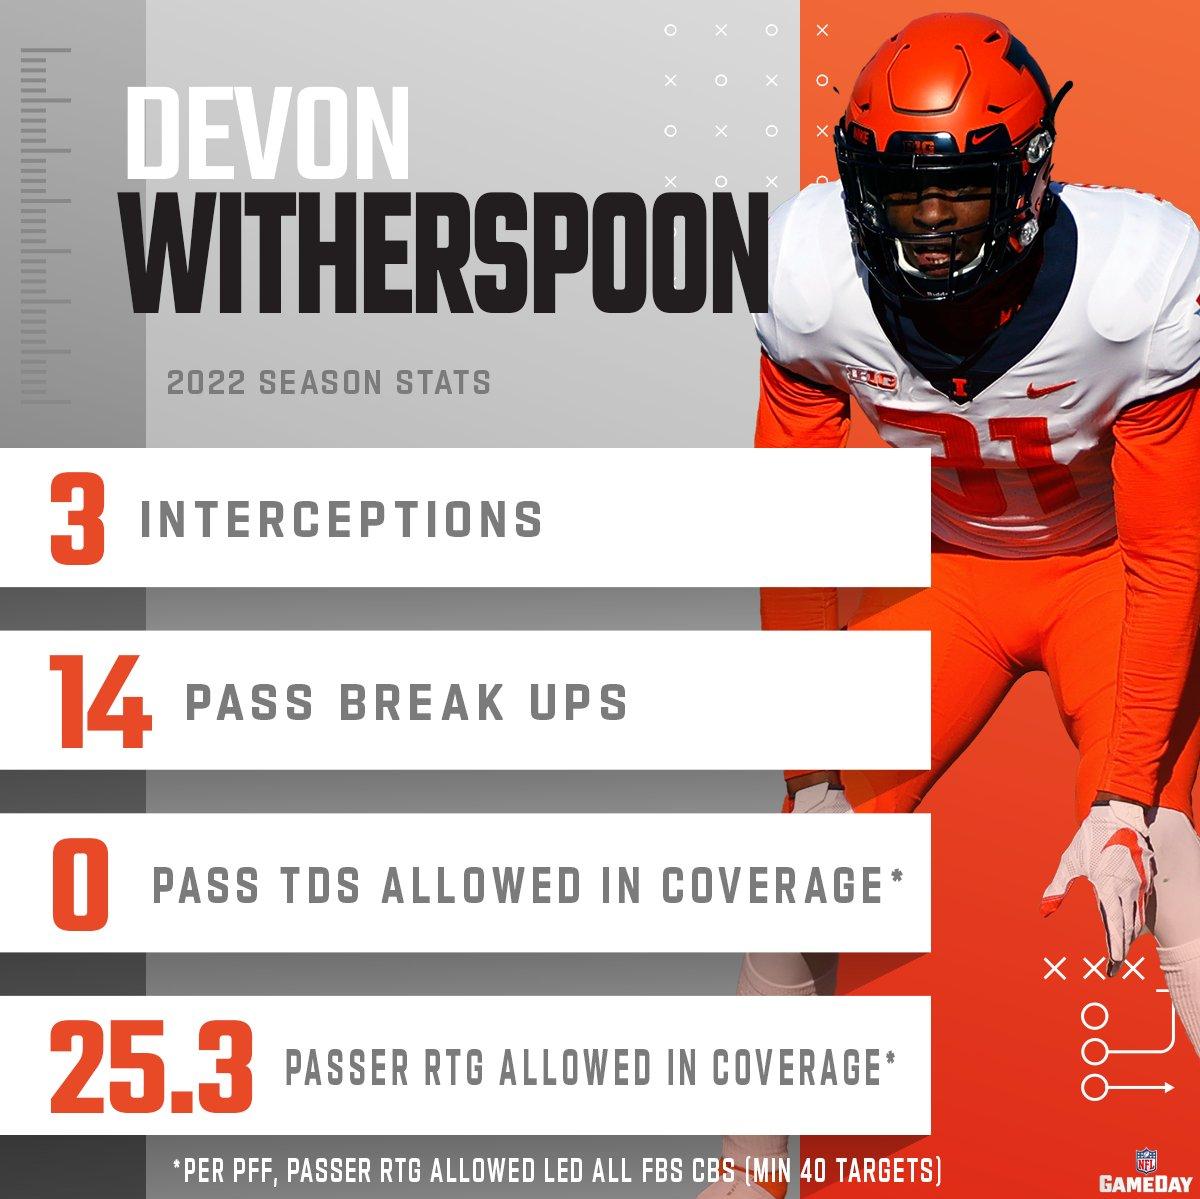 NFL GameDay on MoveTheSticks thinks Devon Witherspoon